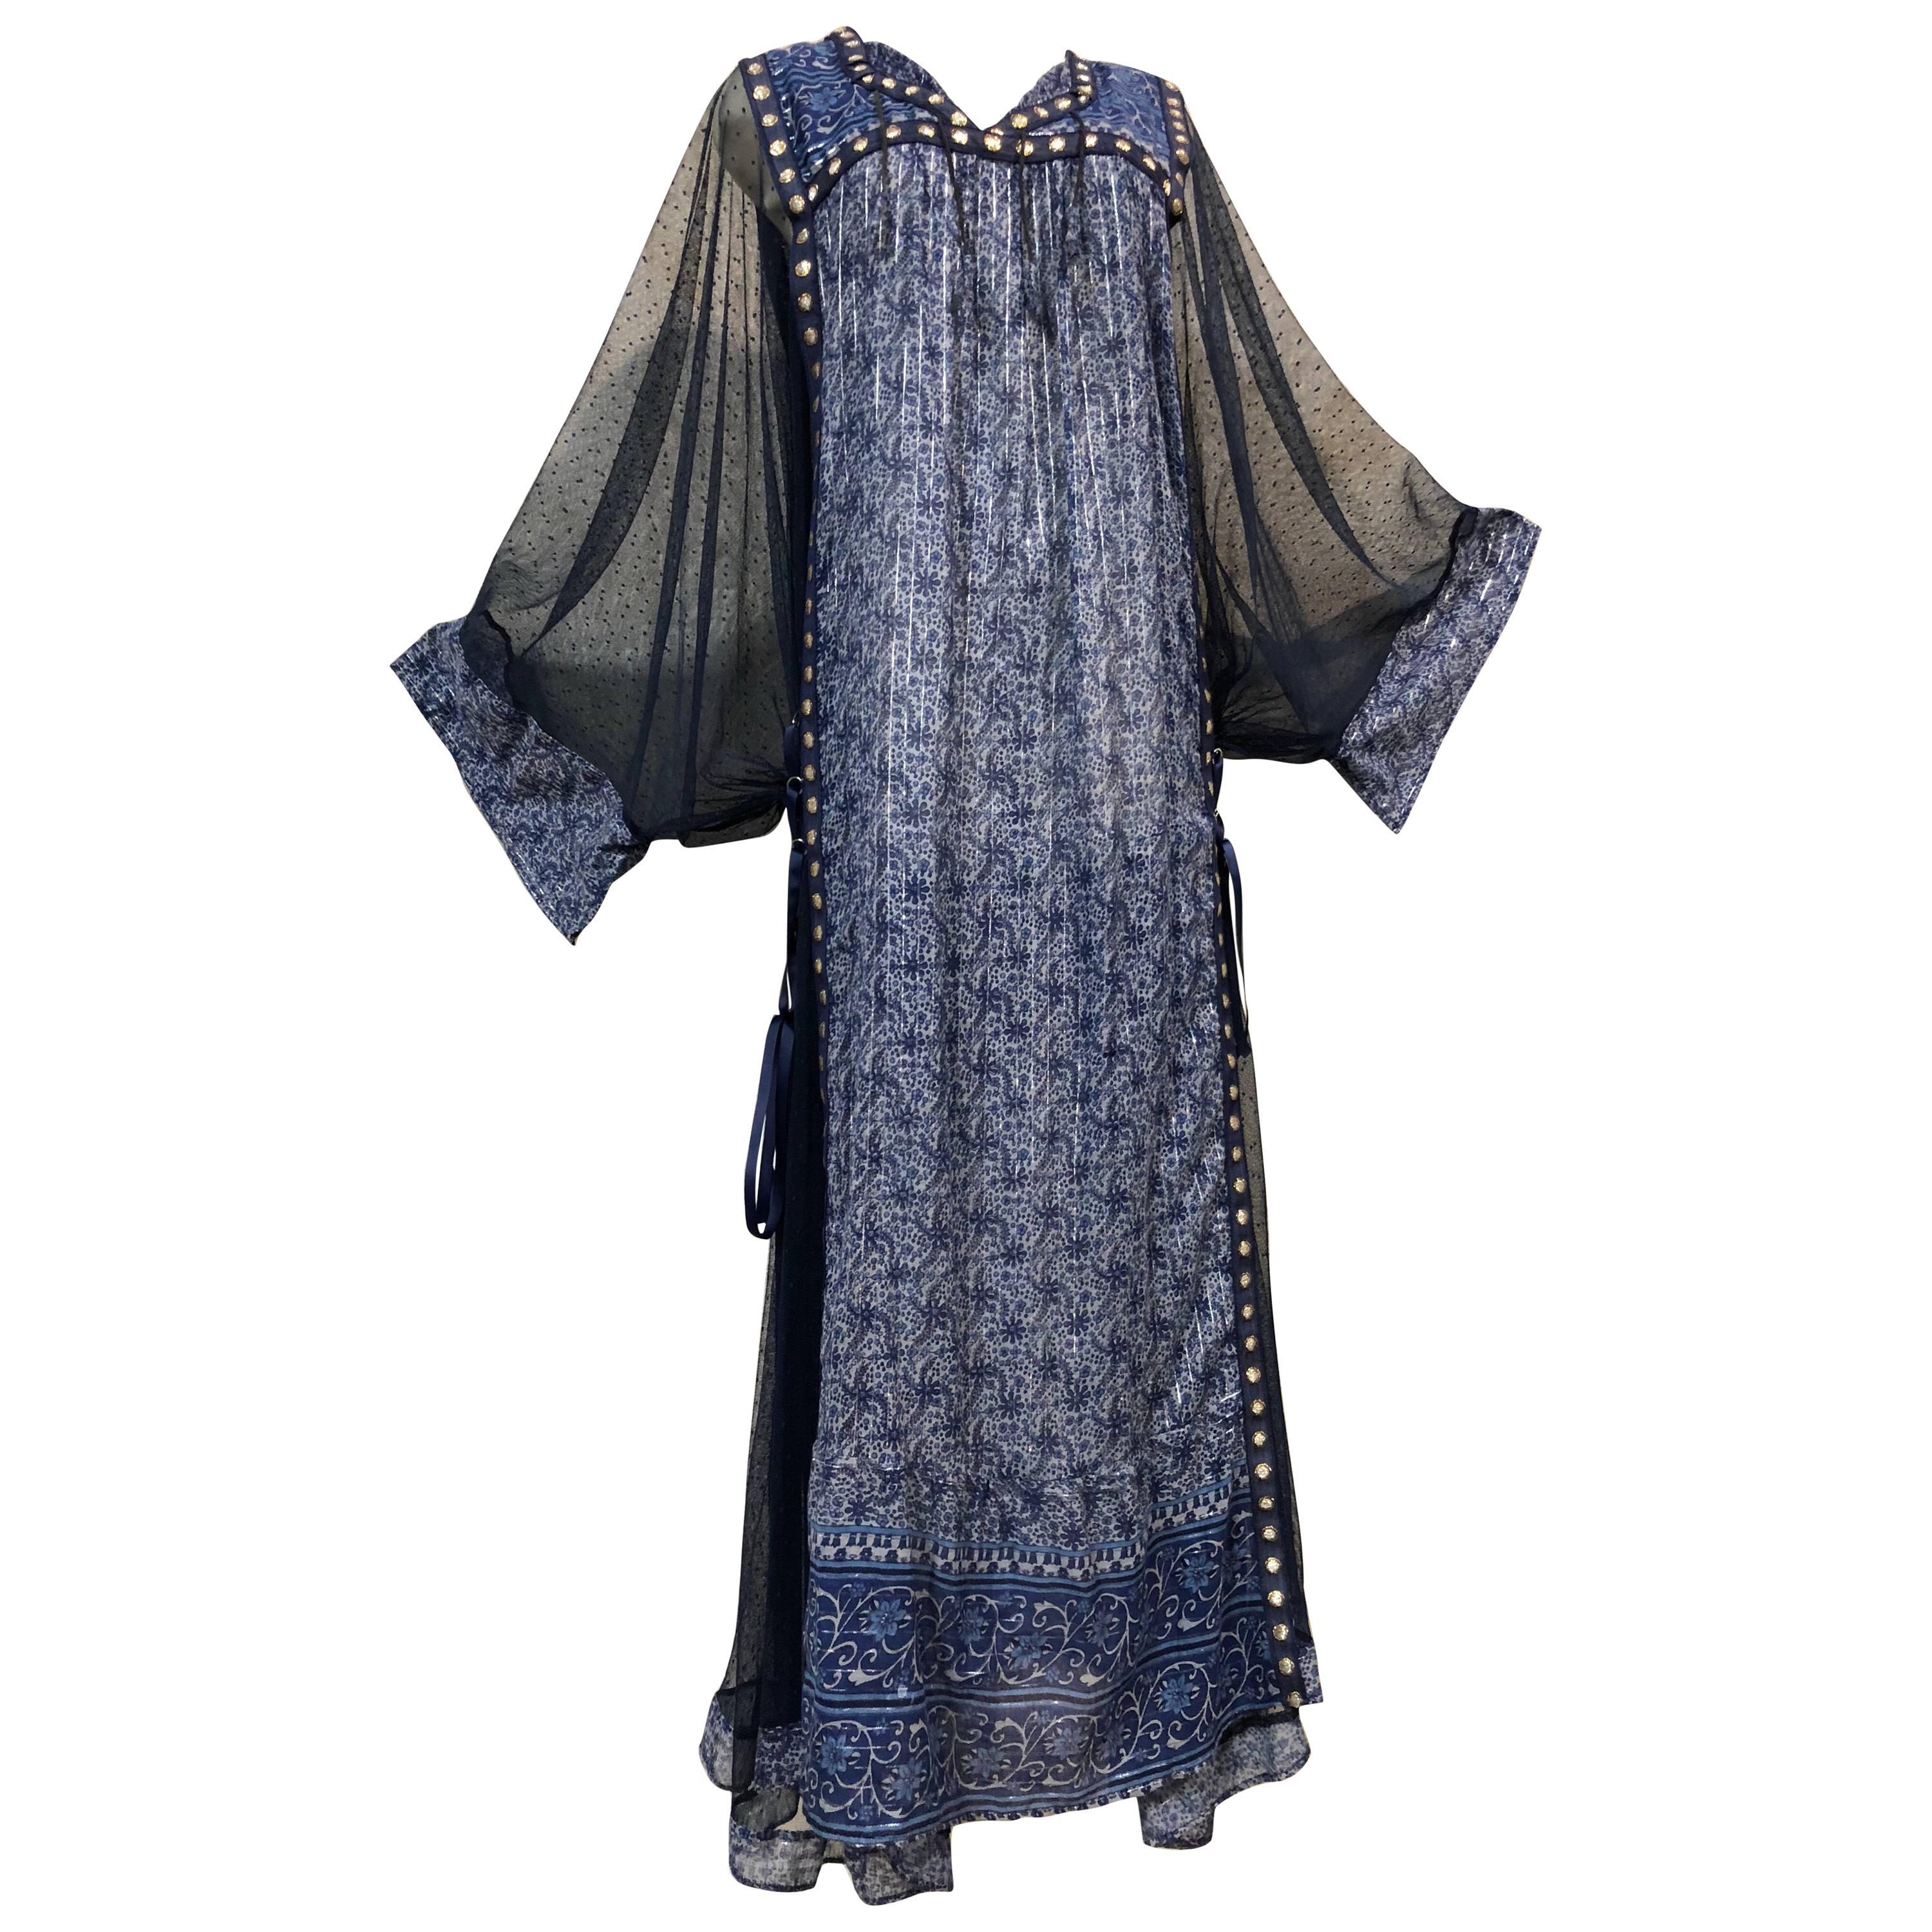  Bohemian Blue India Printed Woven Cotton & Net Kaftan W/ Lace-Up Ribbon Ties